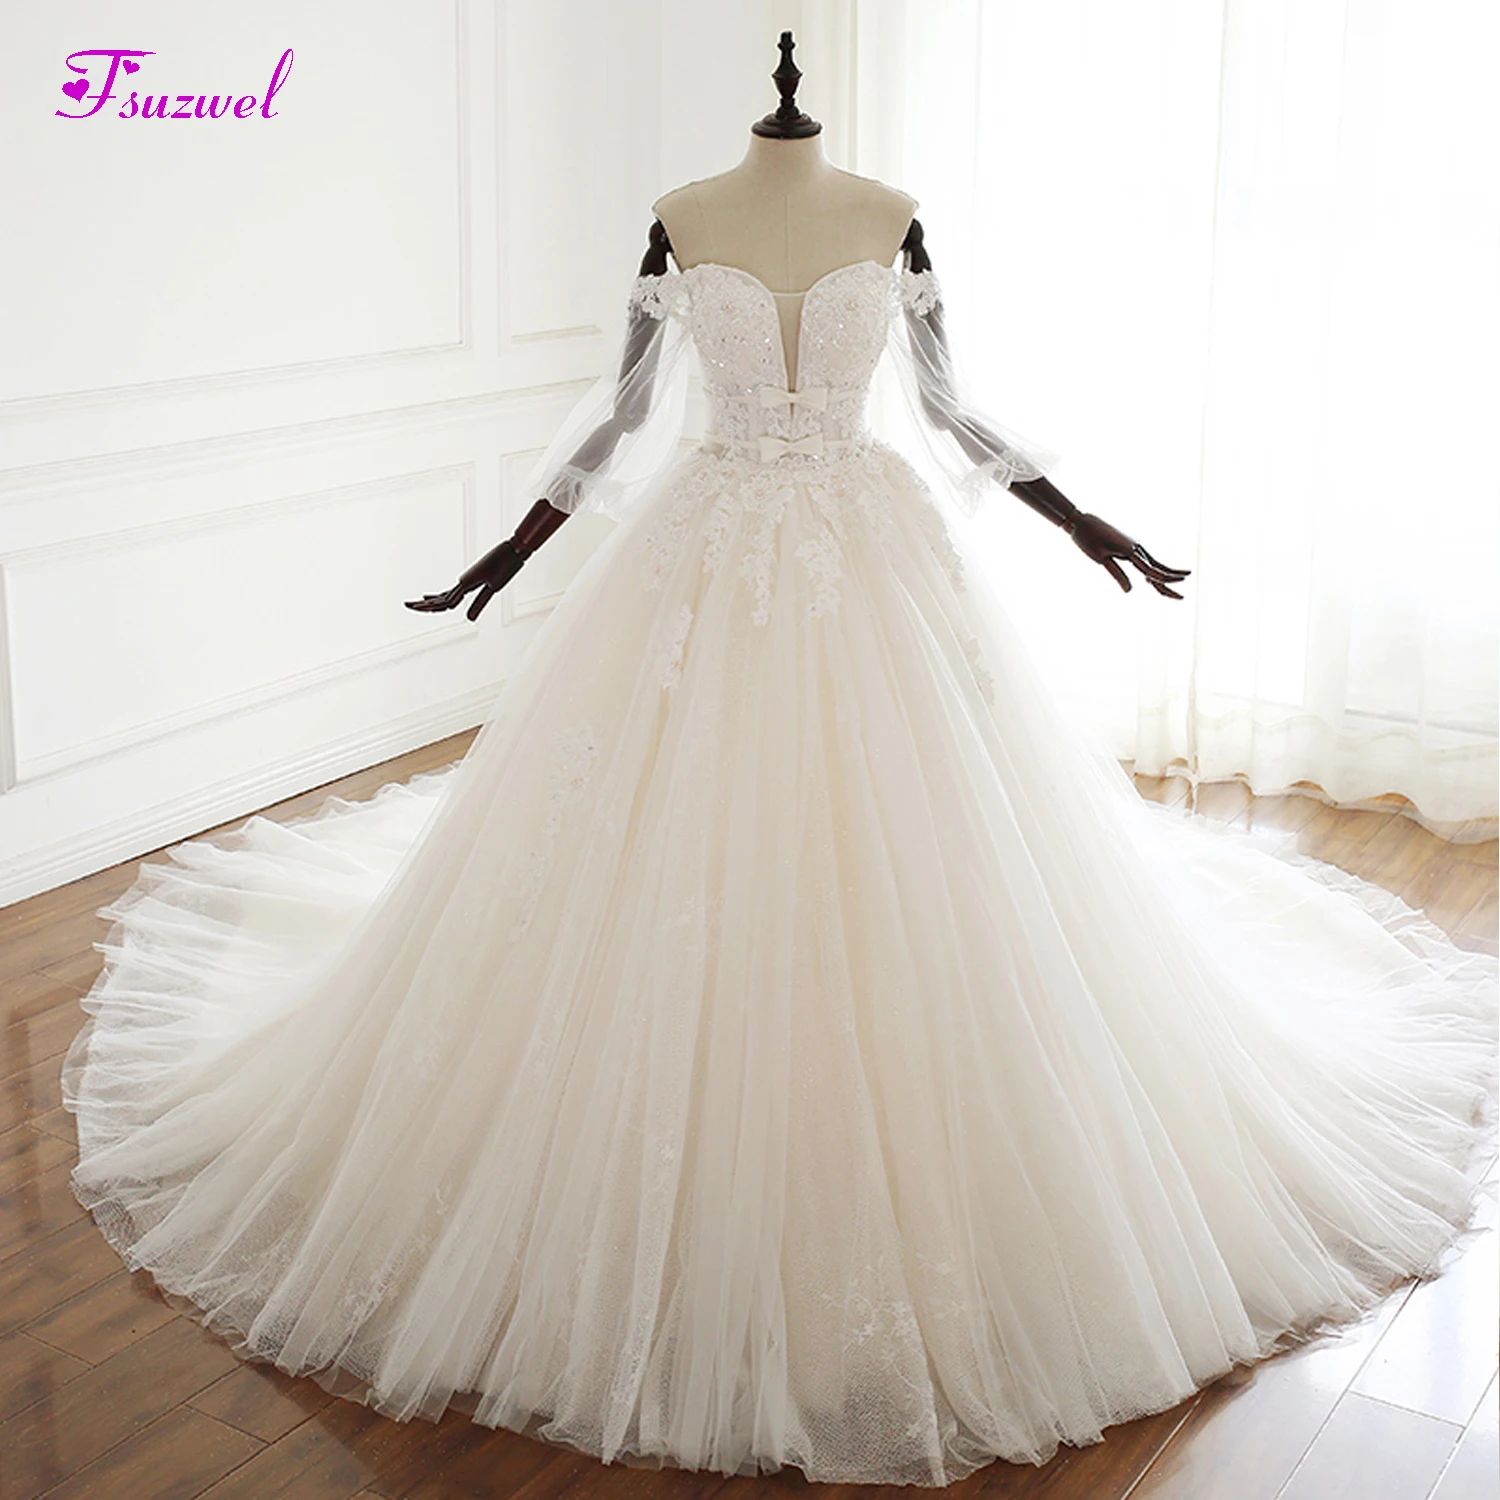 

Fsuzwel Charming Sweetheart Neck Appliques Lace A-Line Wedding Dress 2020 Luxury Beaded Bow Princess Bride Gown Vestido de Noiva